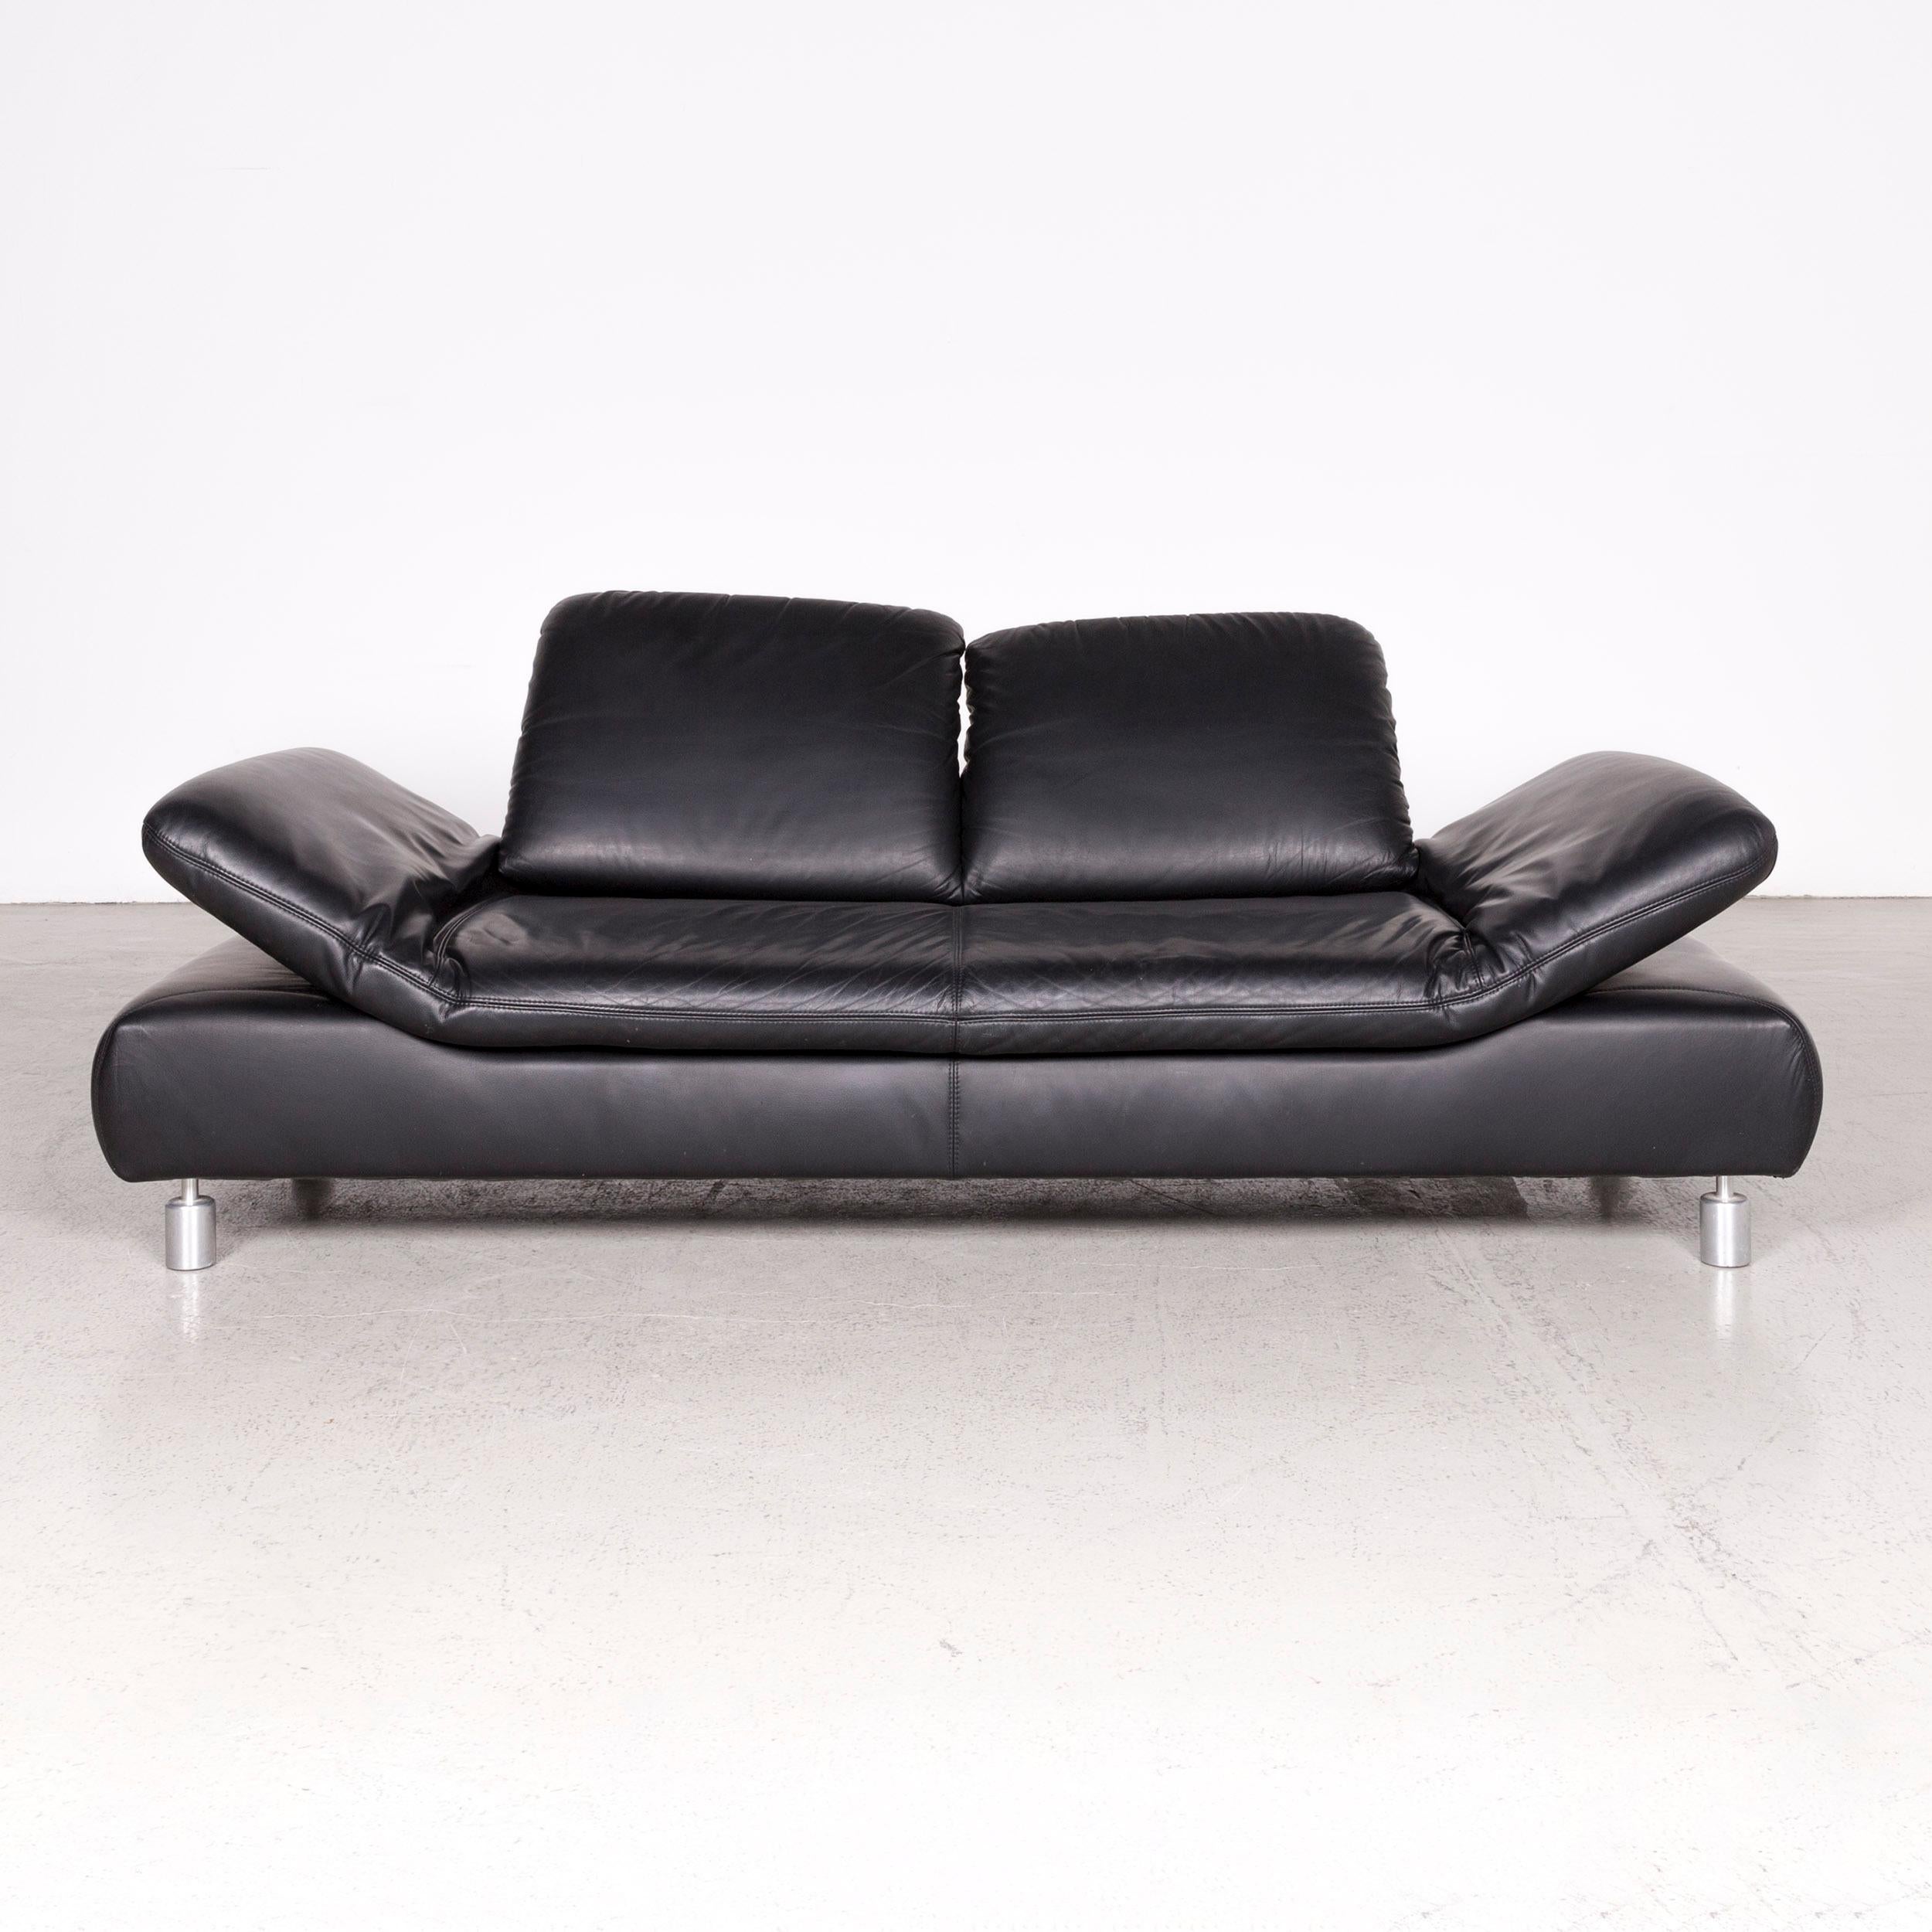 German Koinor Rivoli Designer Leather Sofa Black Genuine Leather Three-Seat Couch